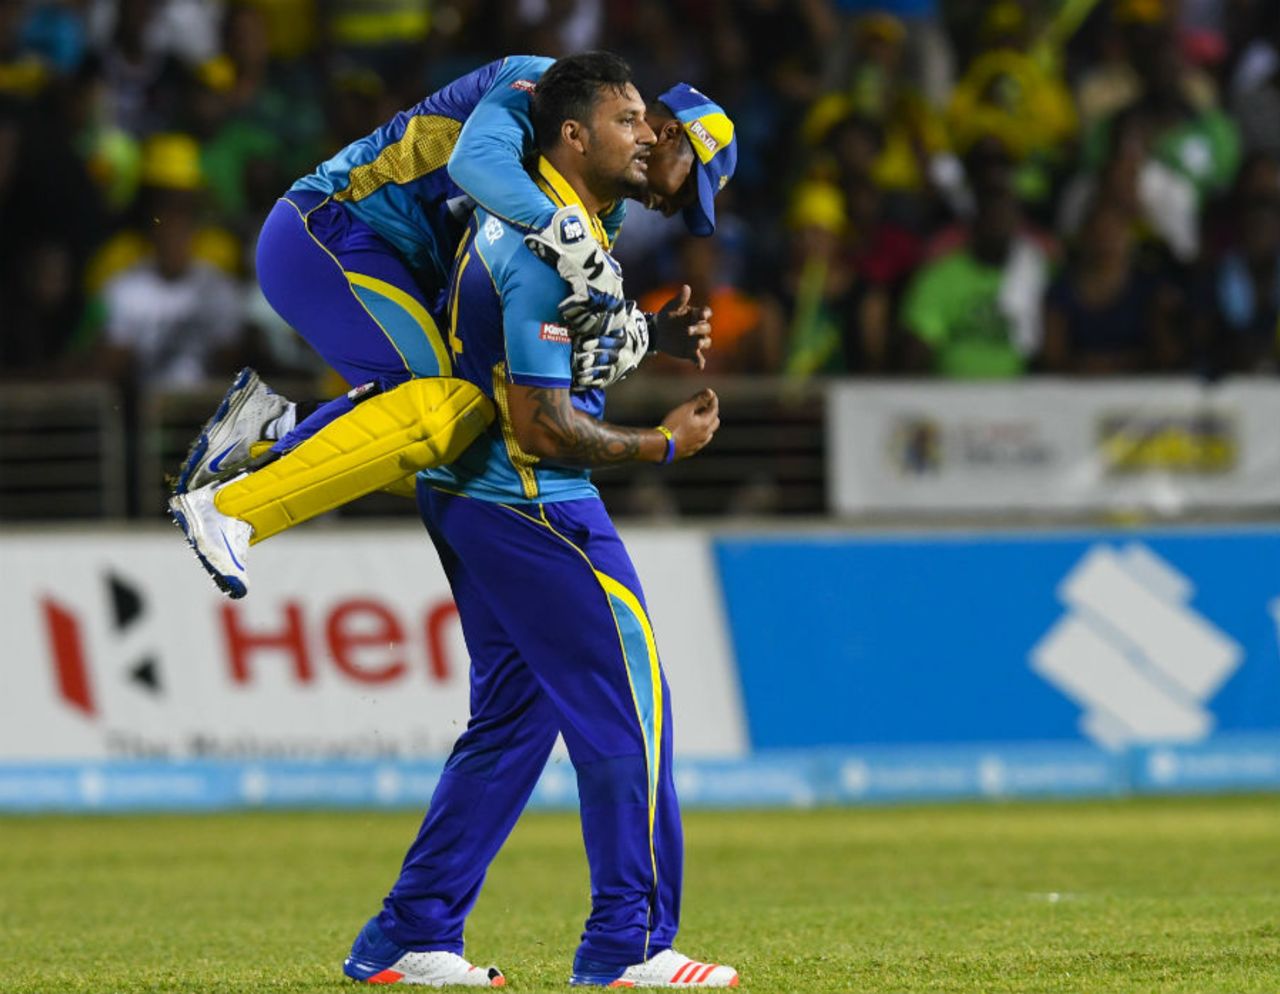 Ravi Rampaul celebrates the wicket of Chris Gayle, Jamaica Tallawahs v Barbados Tridents, Jamaica, CPL 2016, July 20, 2016